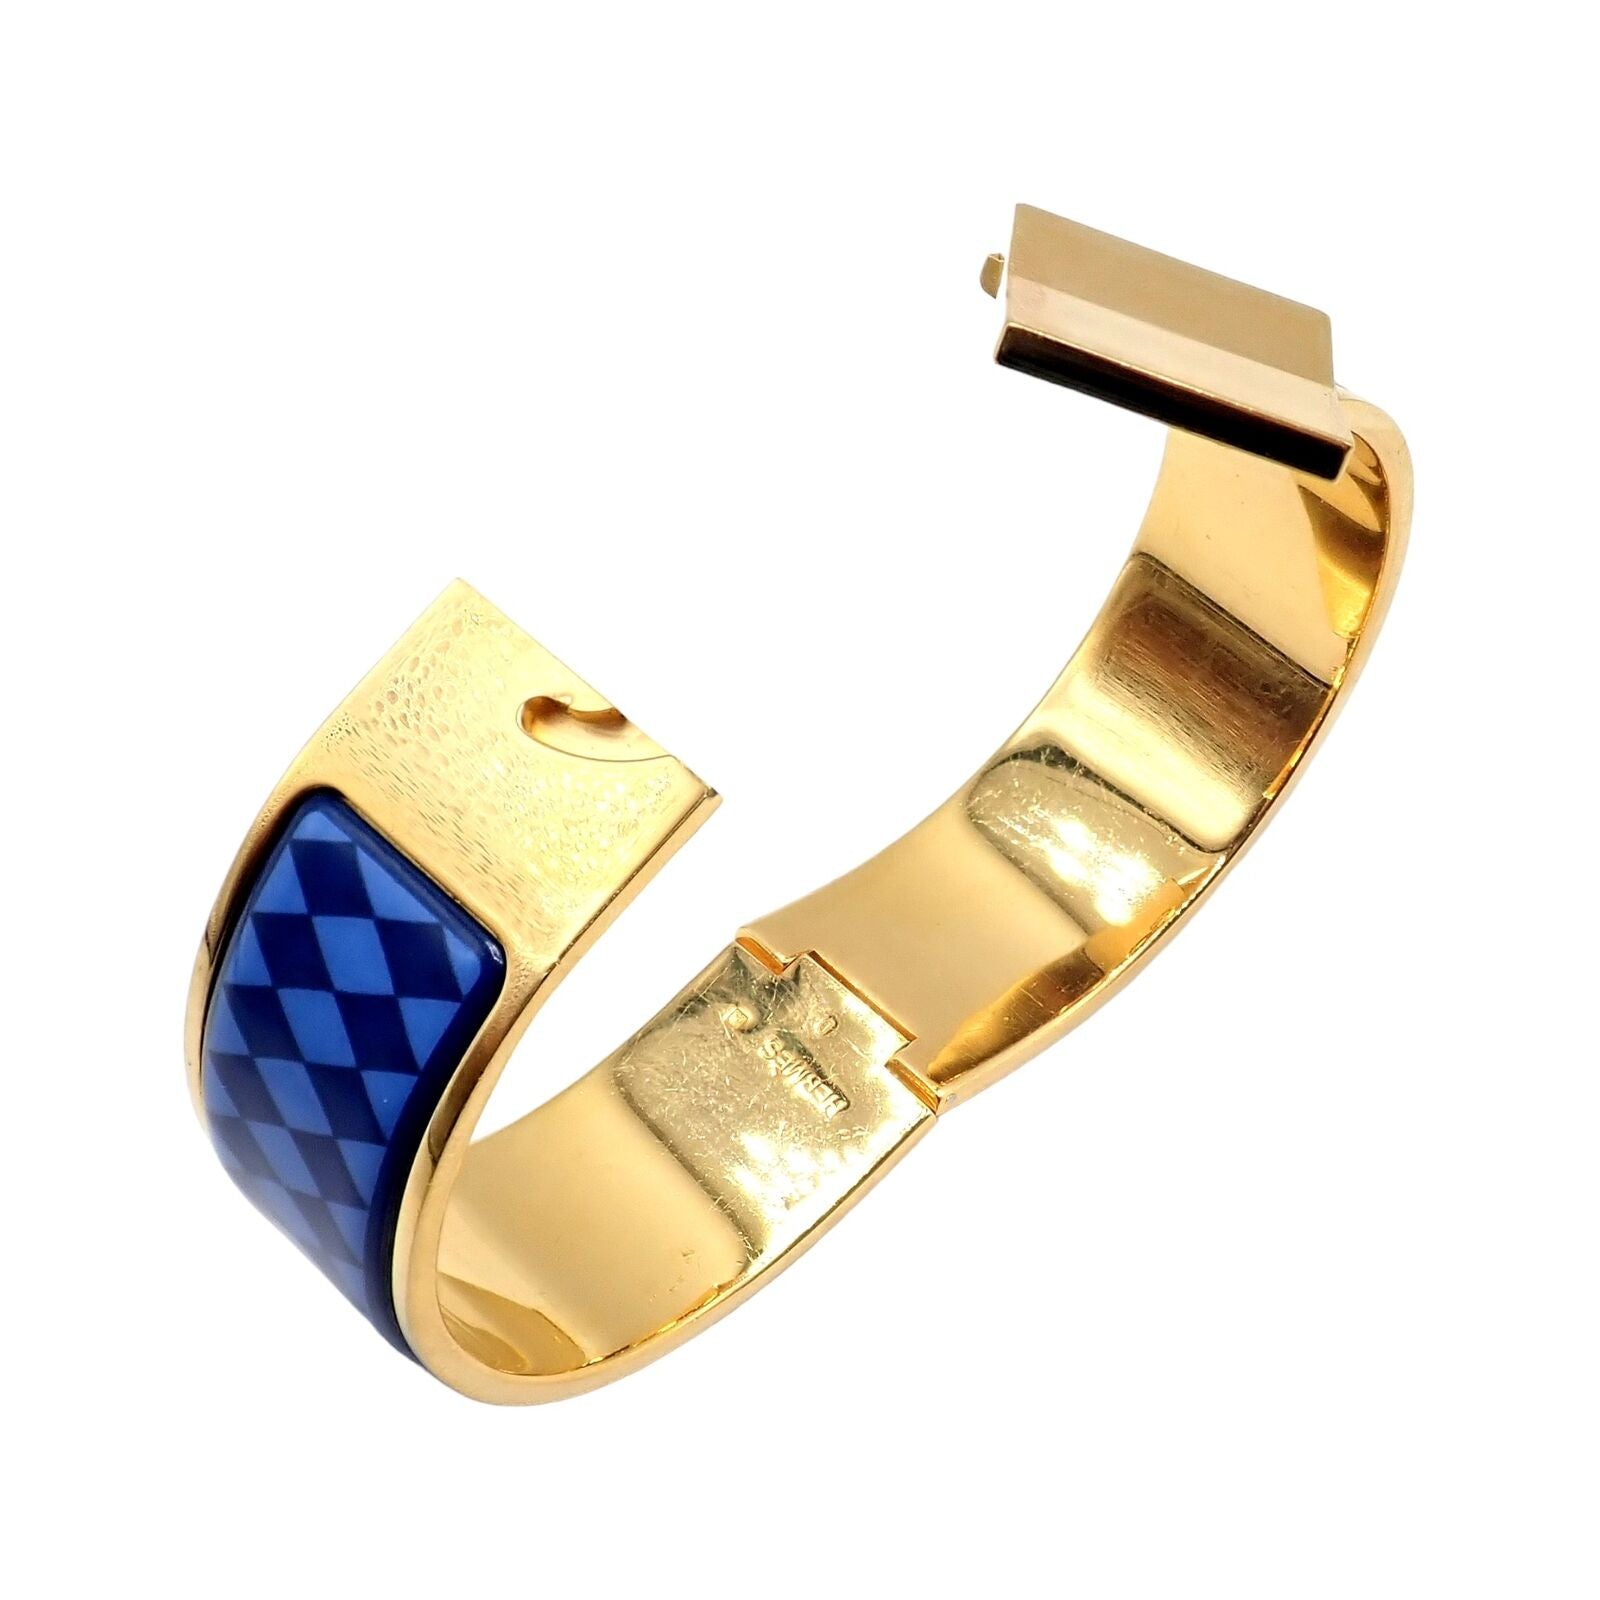 Hermes Jewelry & Watches:Fine Jewelry:Bracelets & Charms Authentic! Hermes Gold Hardware Blue Clic Clac Ladies Bangle Bracelet Size D